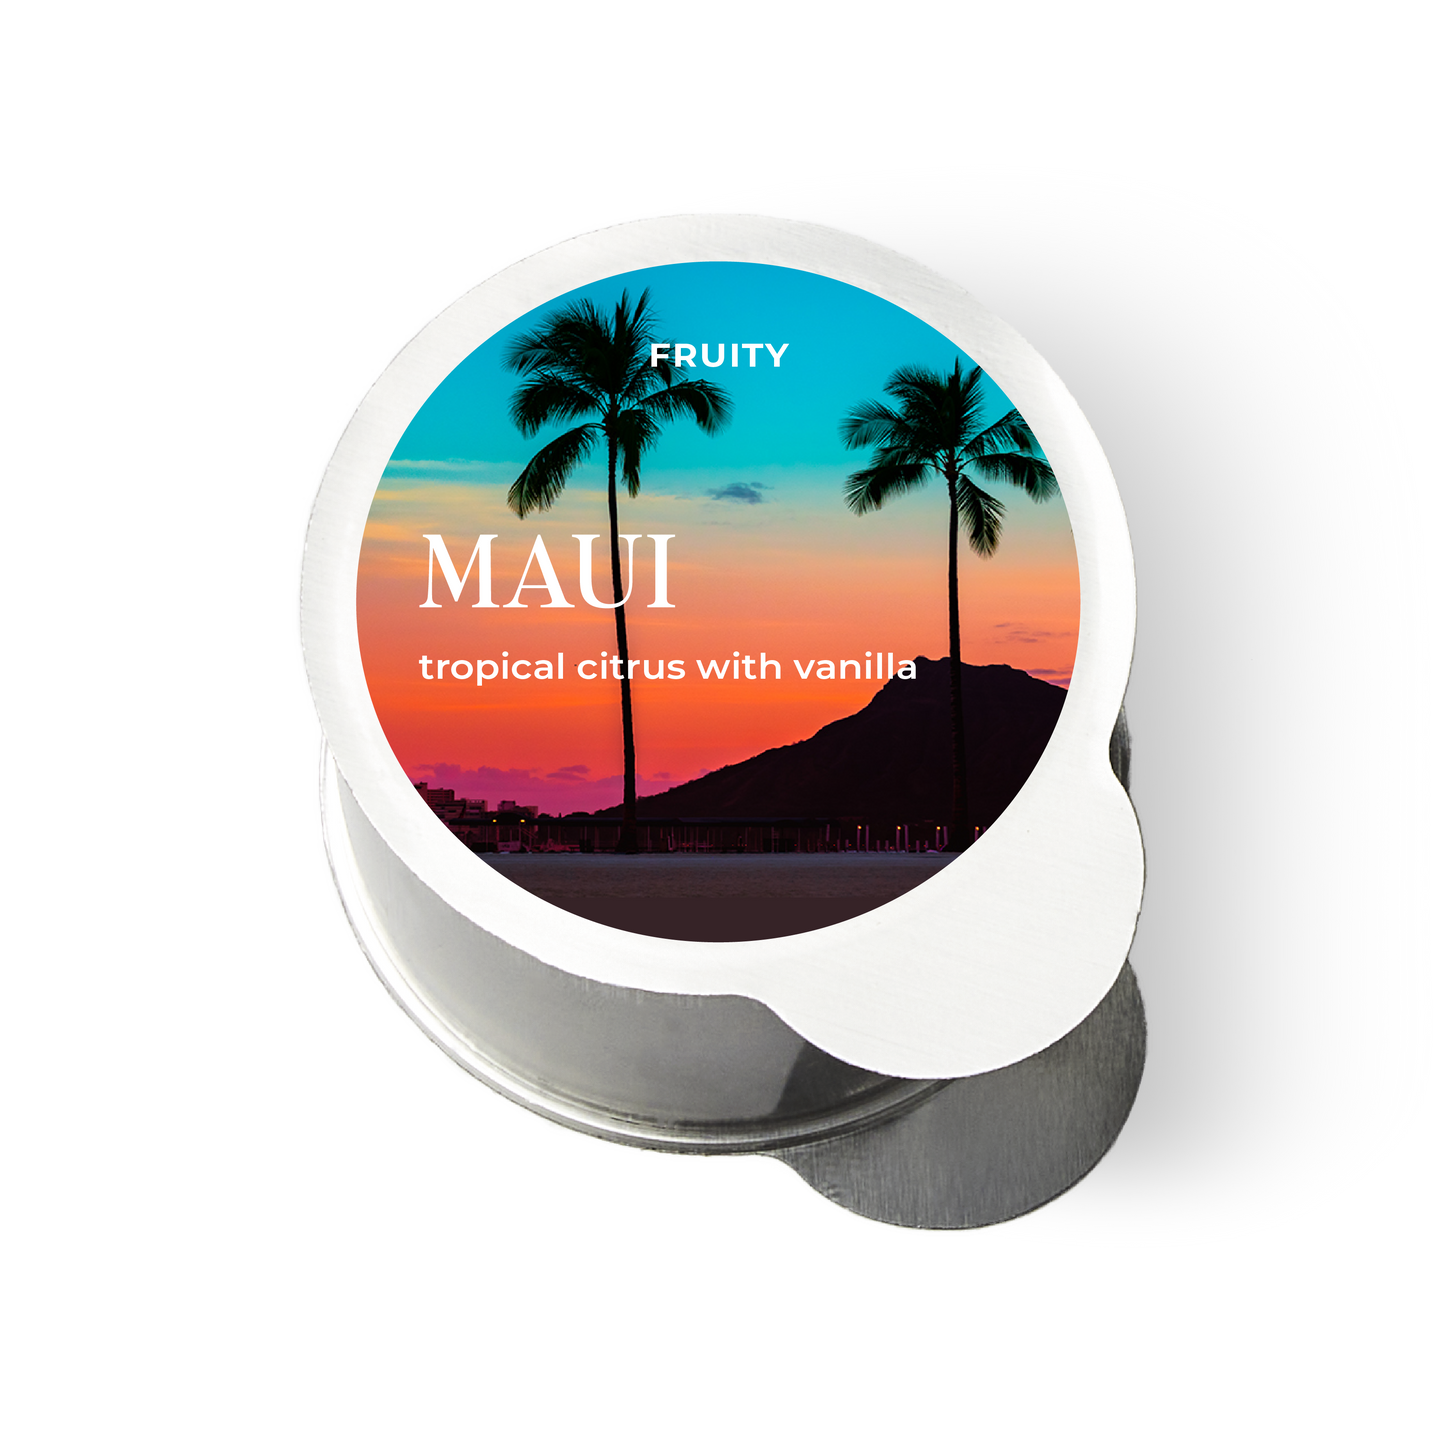 Maui - MojiLife Online- The AirMoji